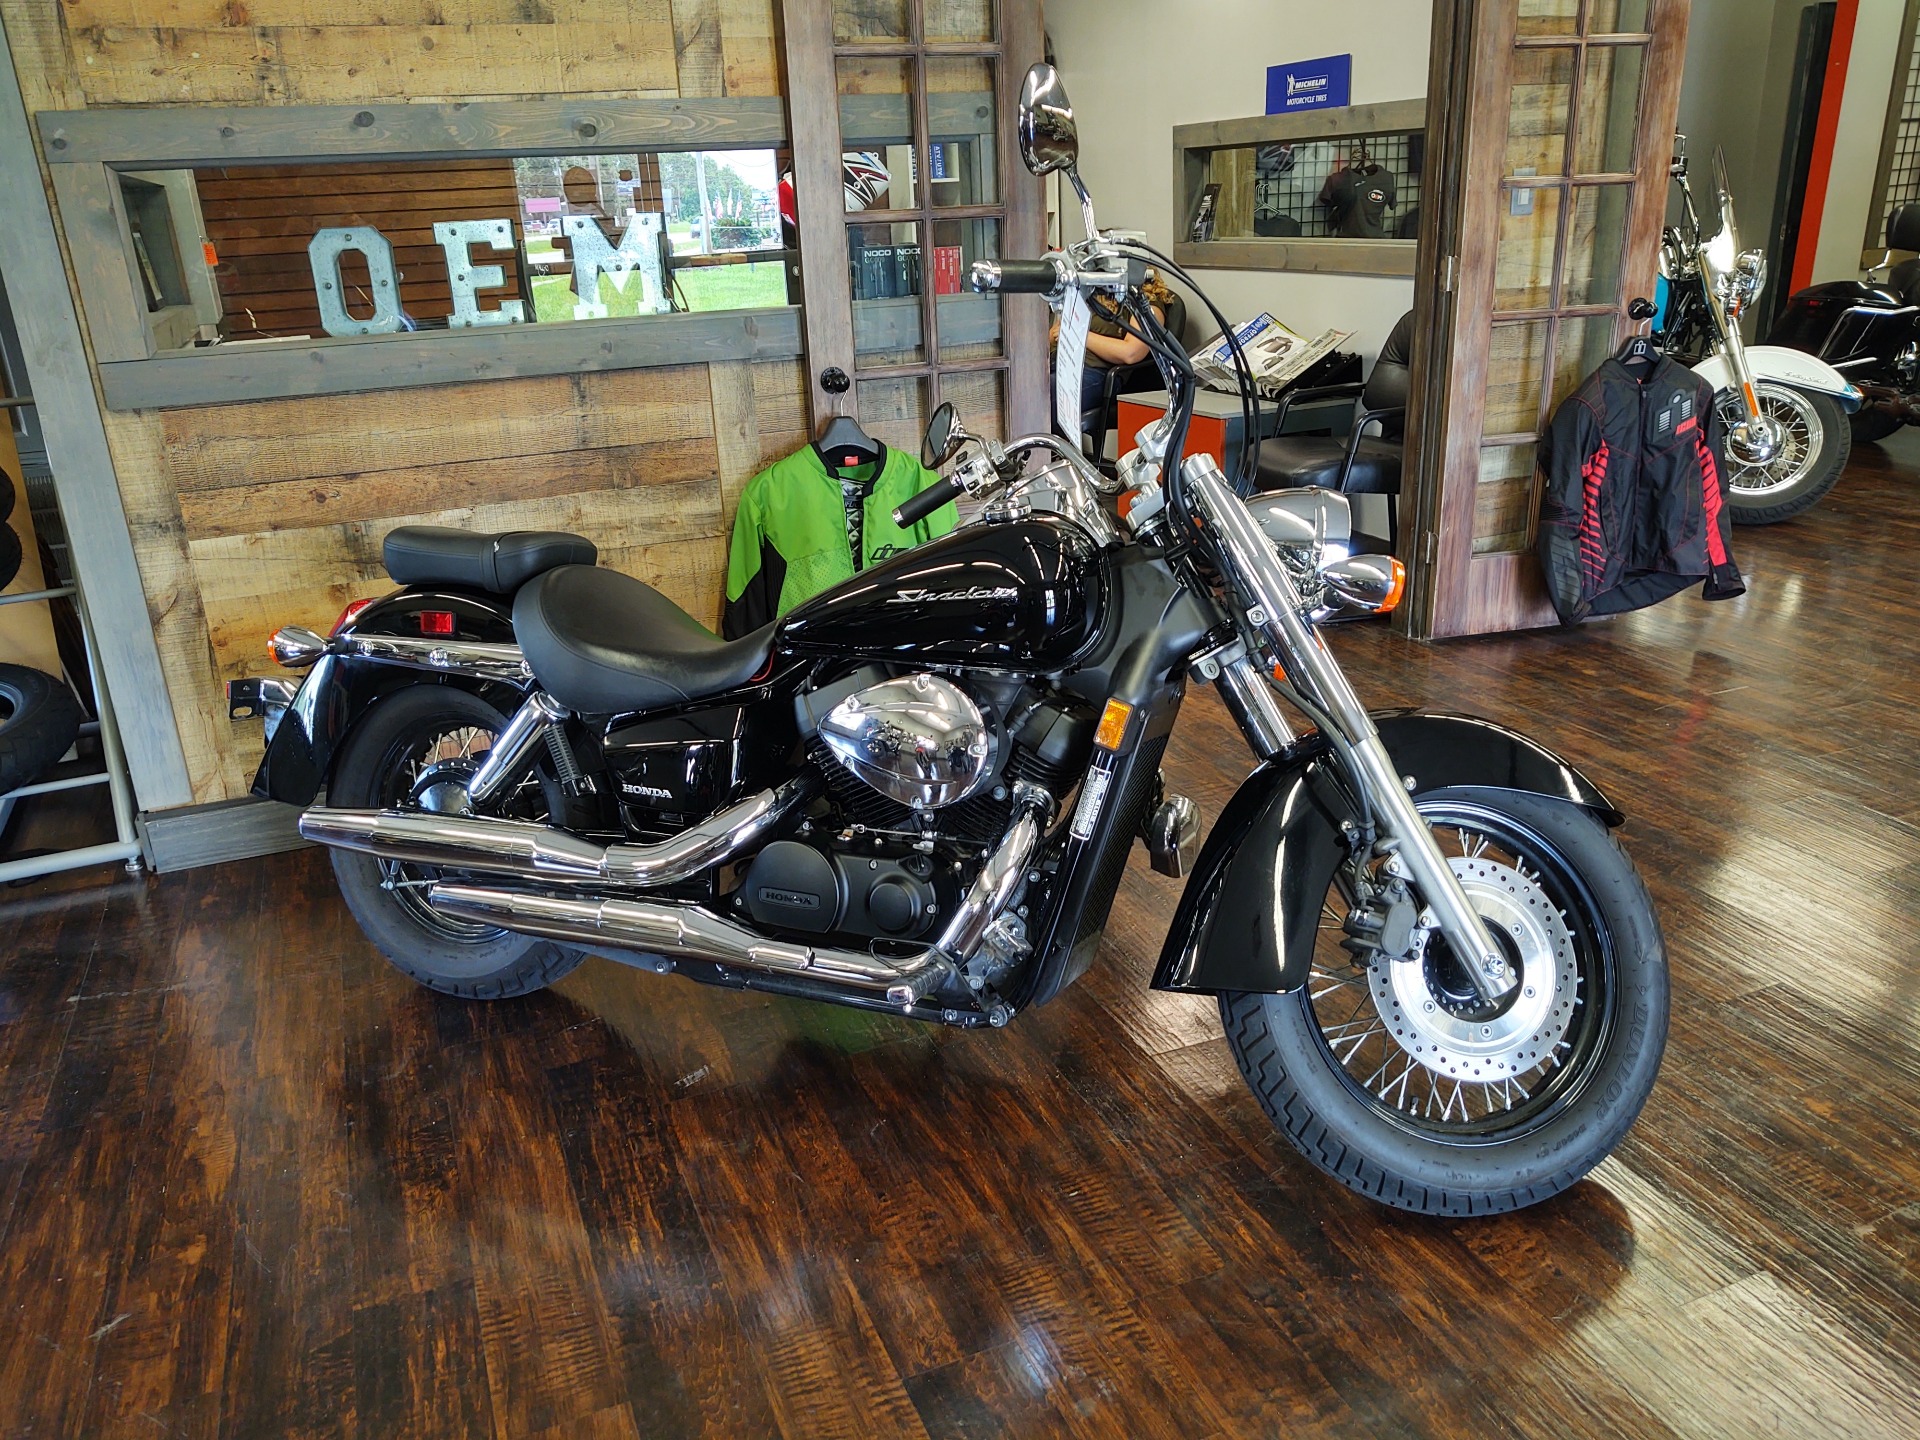 Used 2019 Honda Shadow Aero 750 Motorcycles in Pensacola FL O